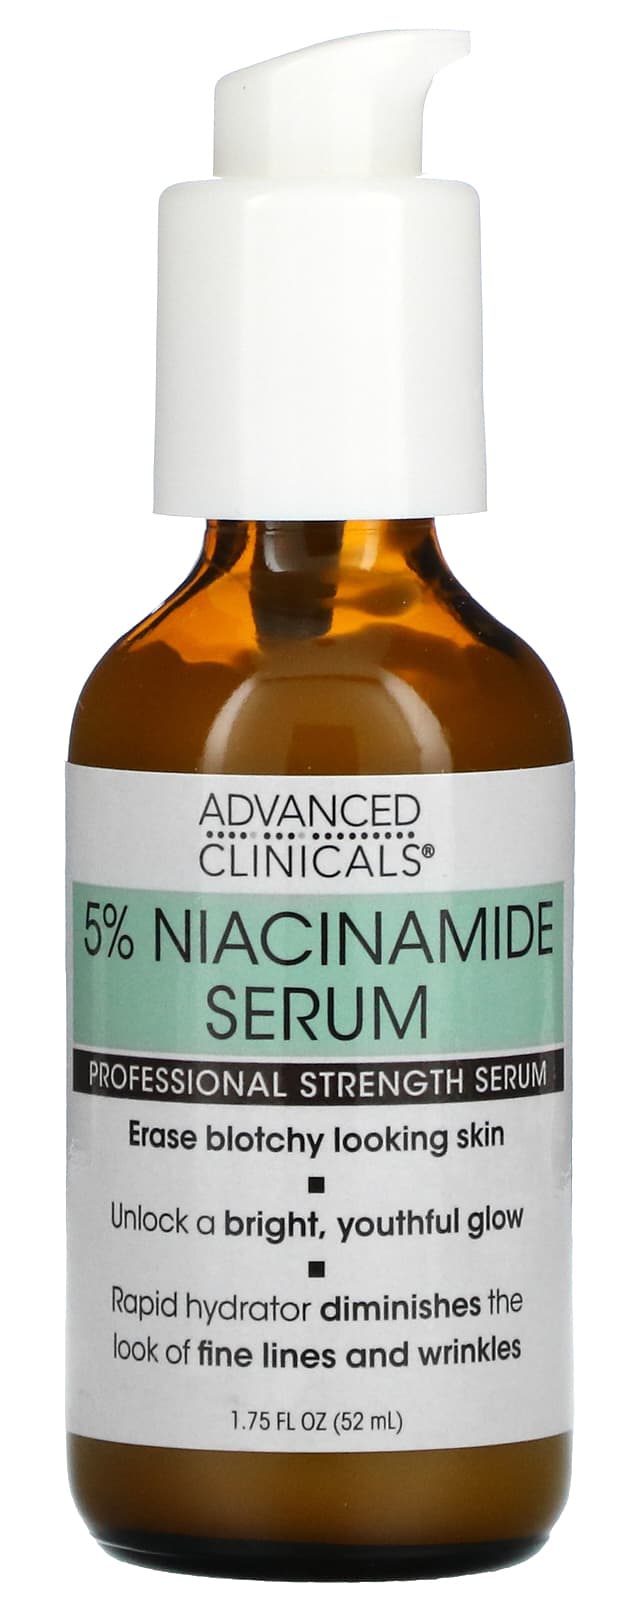 Advanced Clinicals 5% Niacinamide Serum